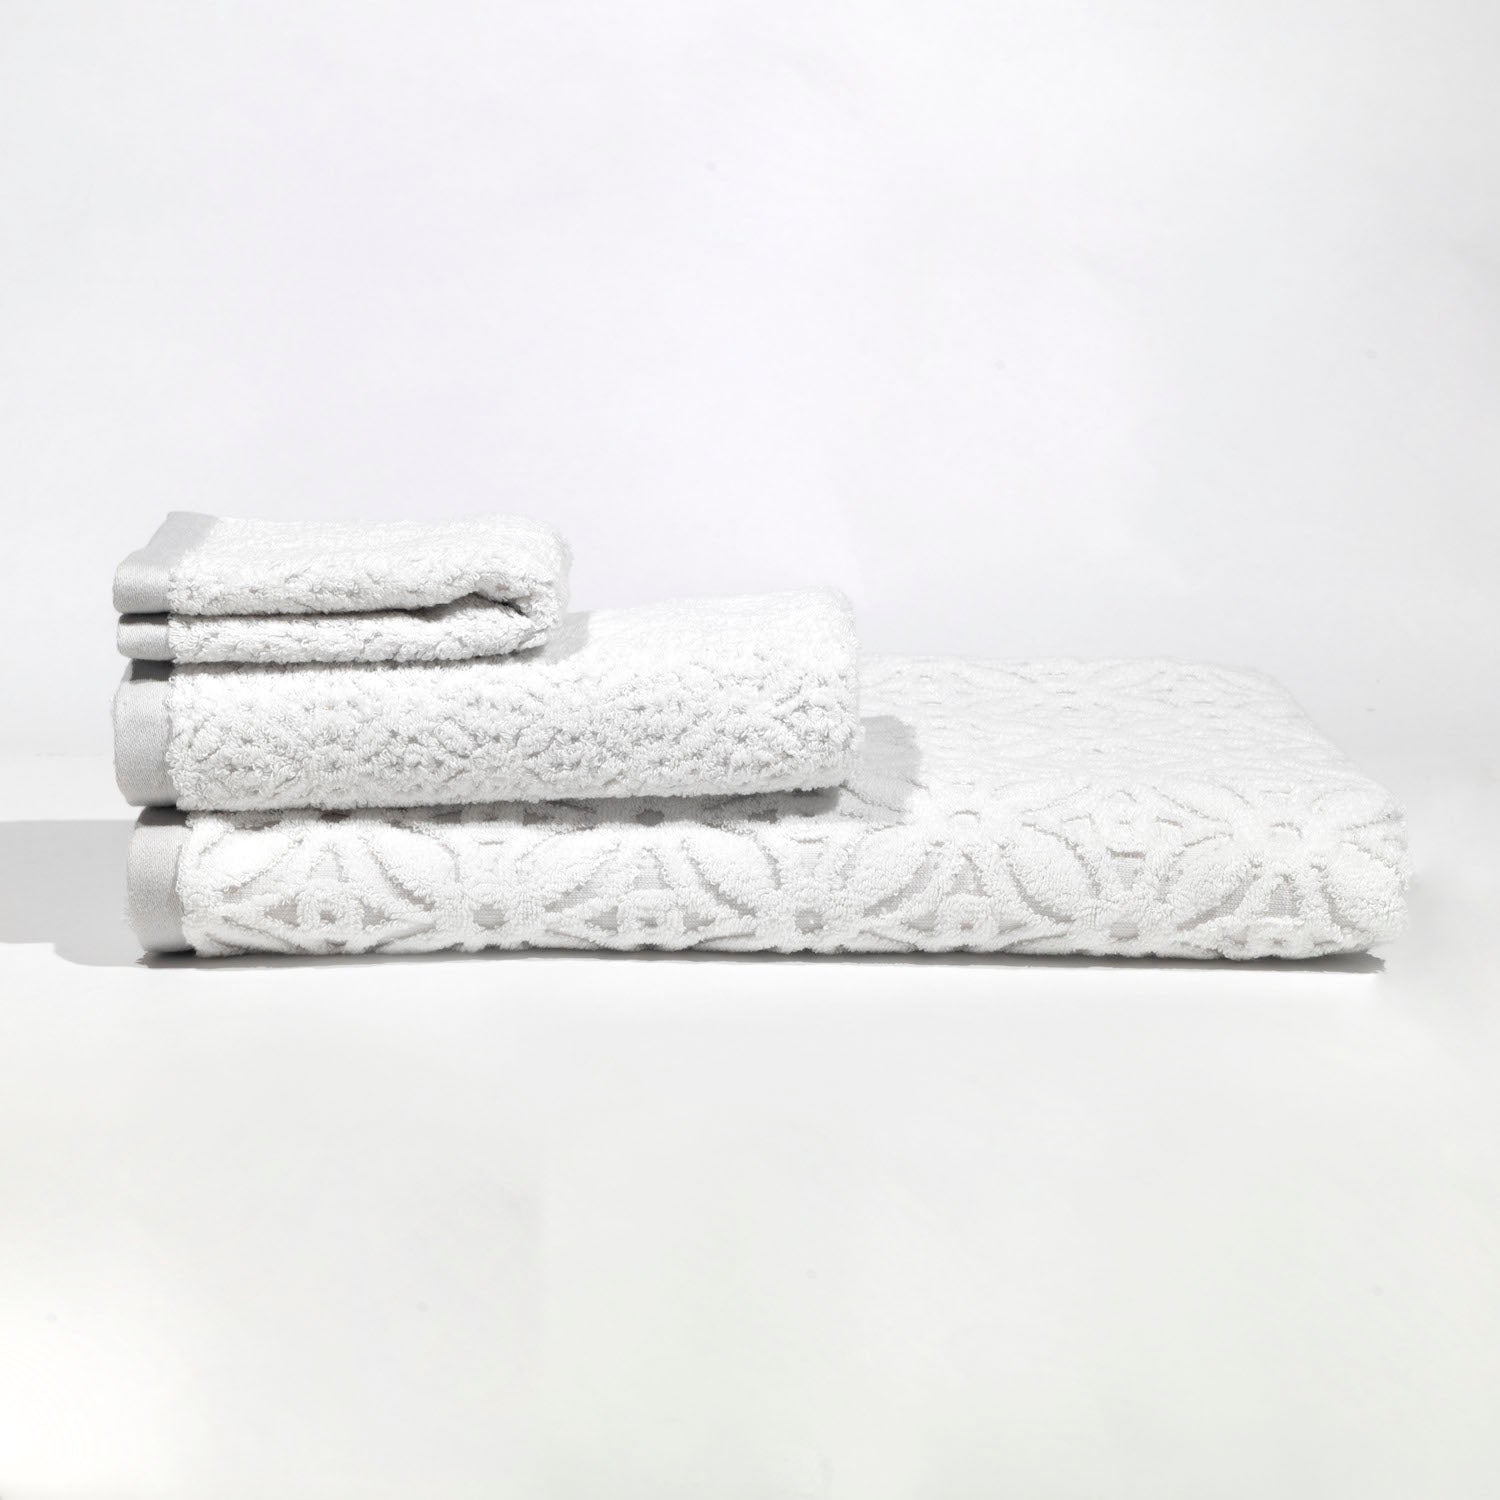 Superior Cotton Jacquard Border 2-pc. Bath Towel Set Grey